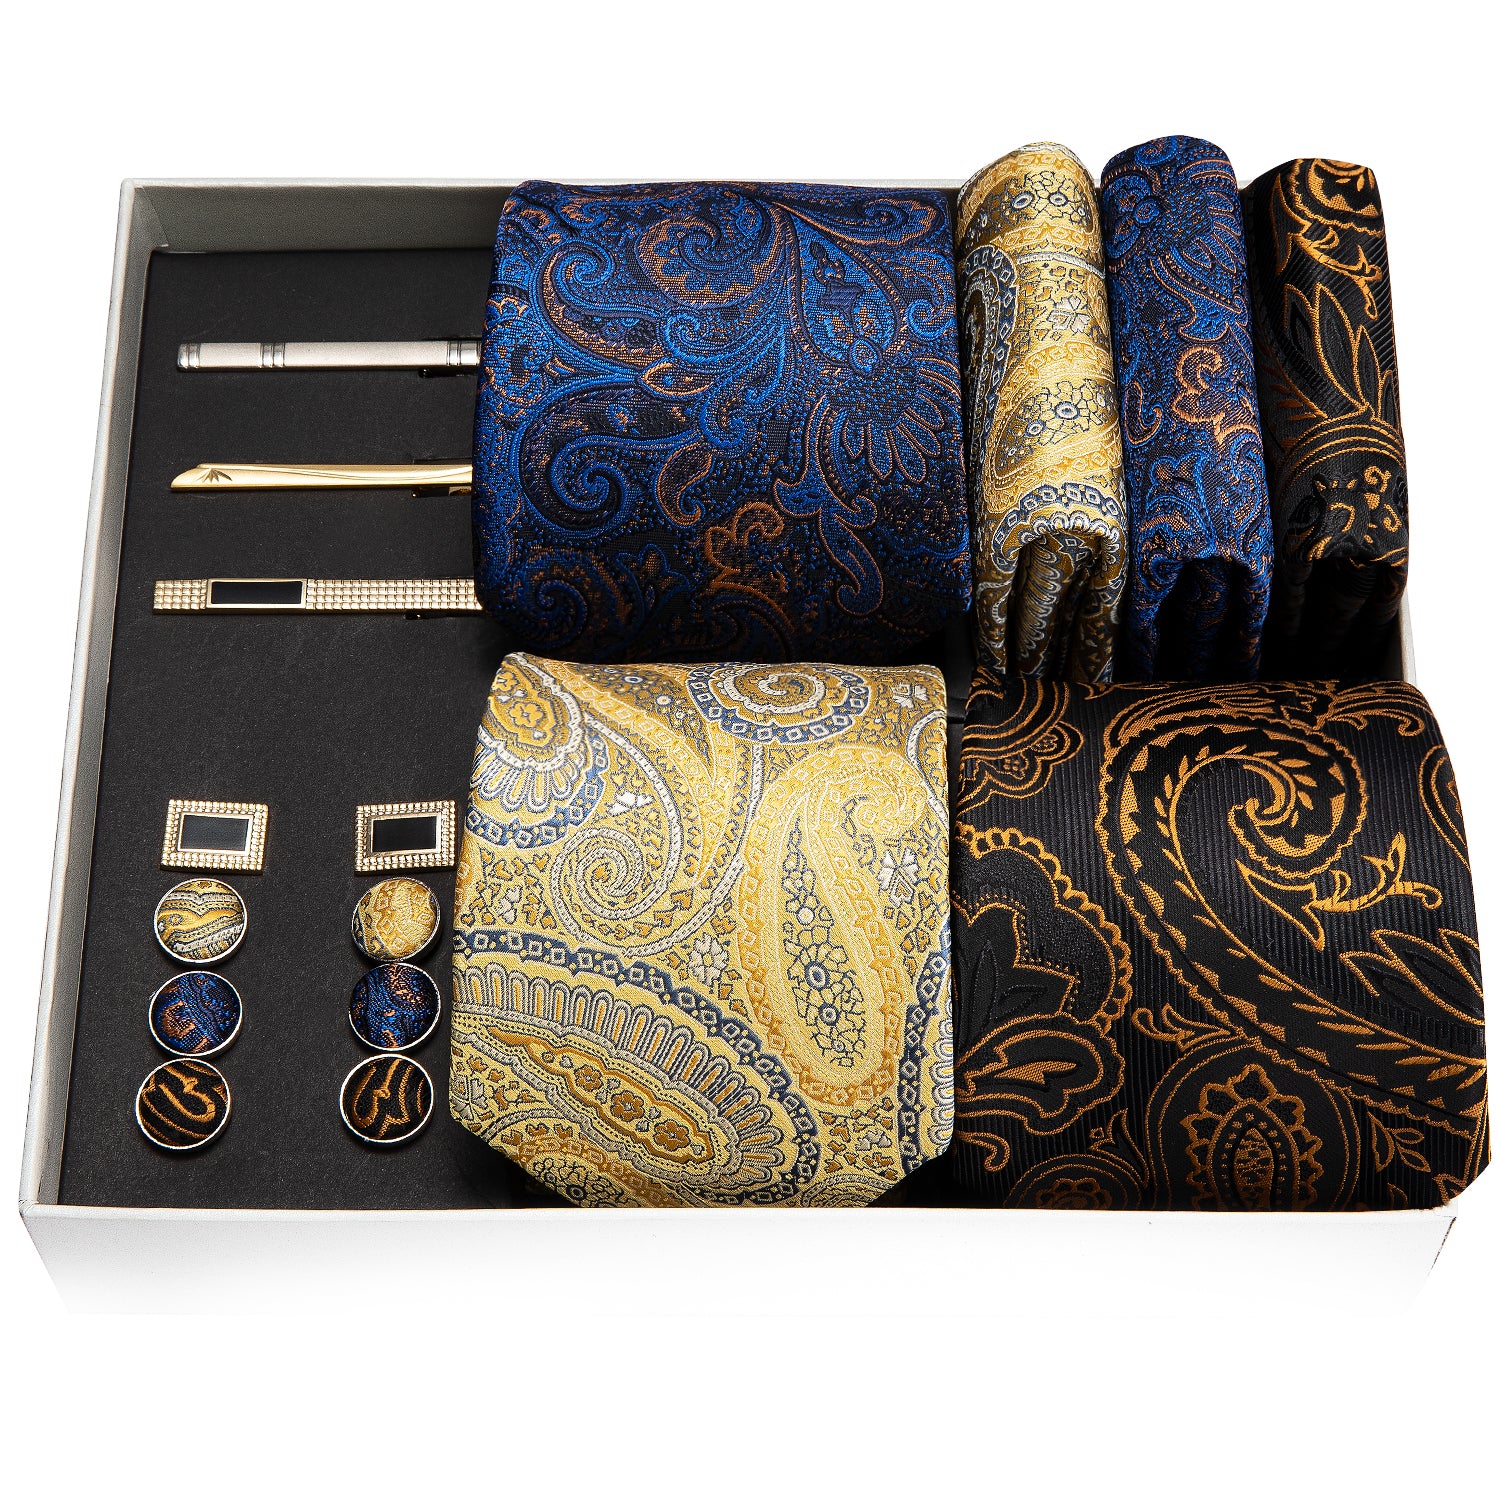 Barry.wang Men's Tie Set Yellow Blue Black Paisley Floral Silk Necktie Pocket Square Gift Box Set